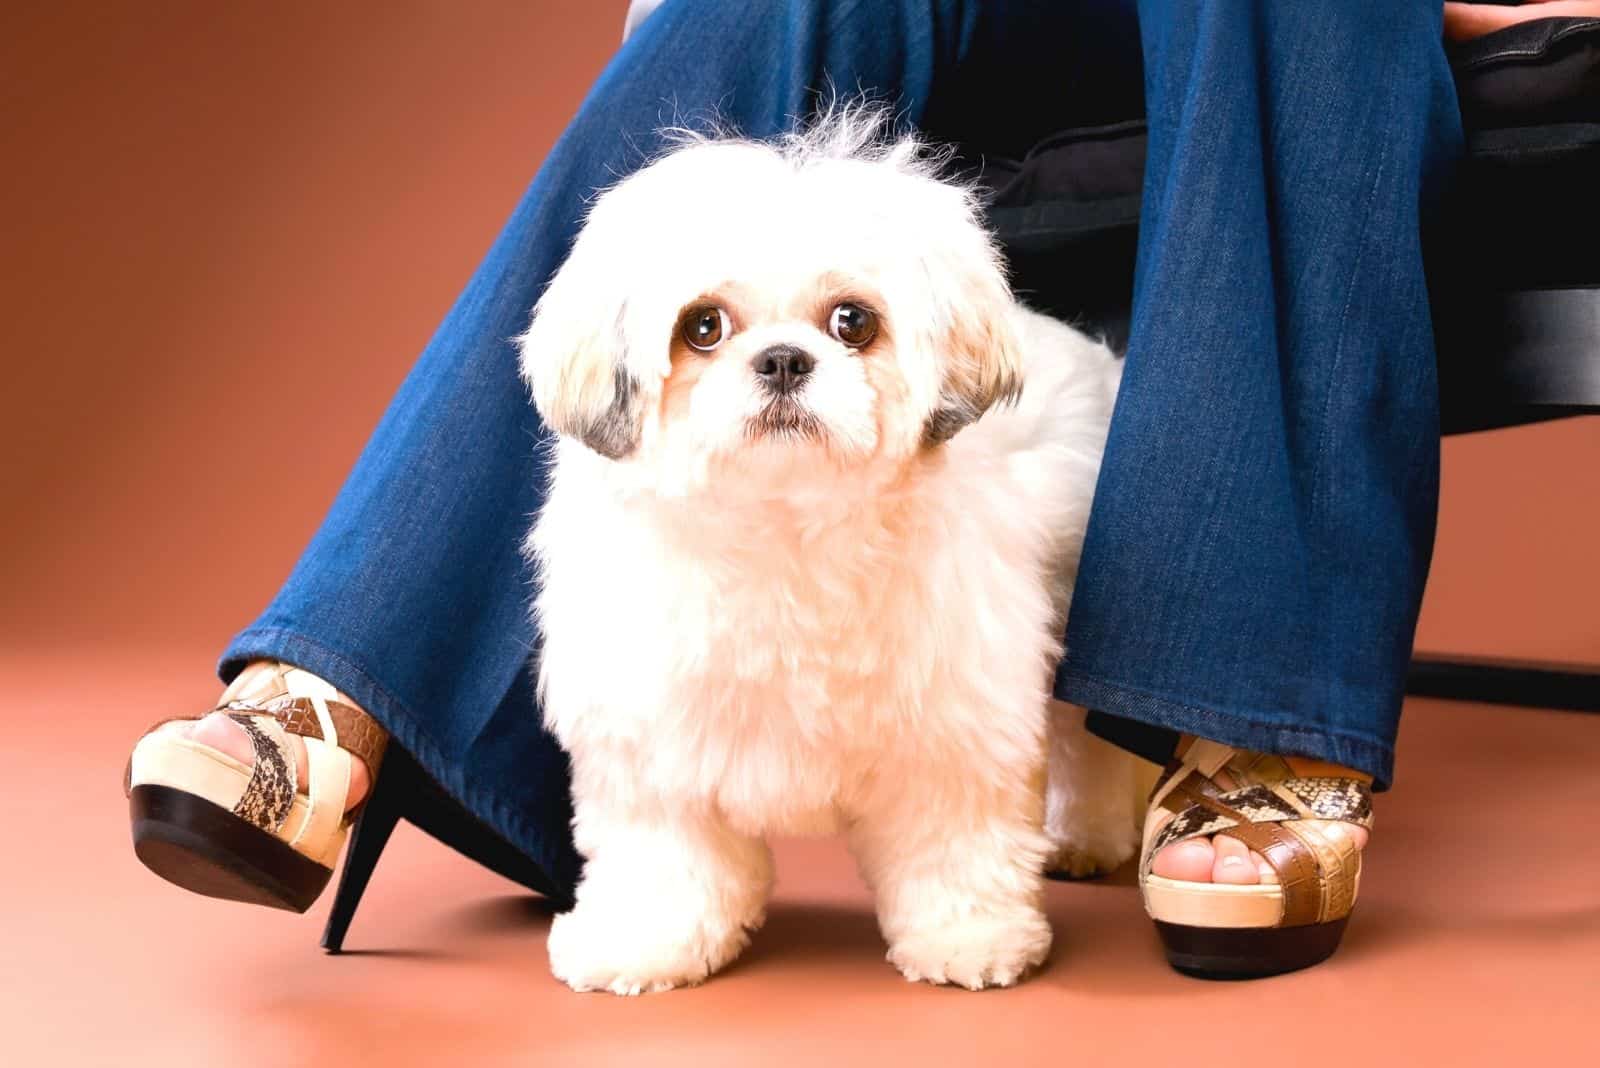 shih tzu poodle sitting near the stiletto heels